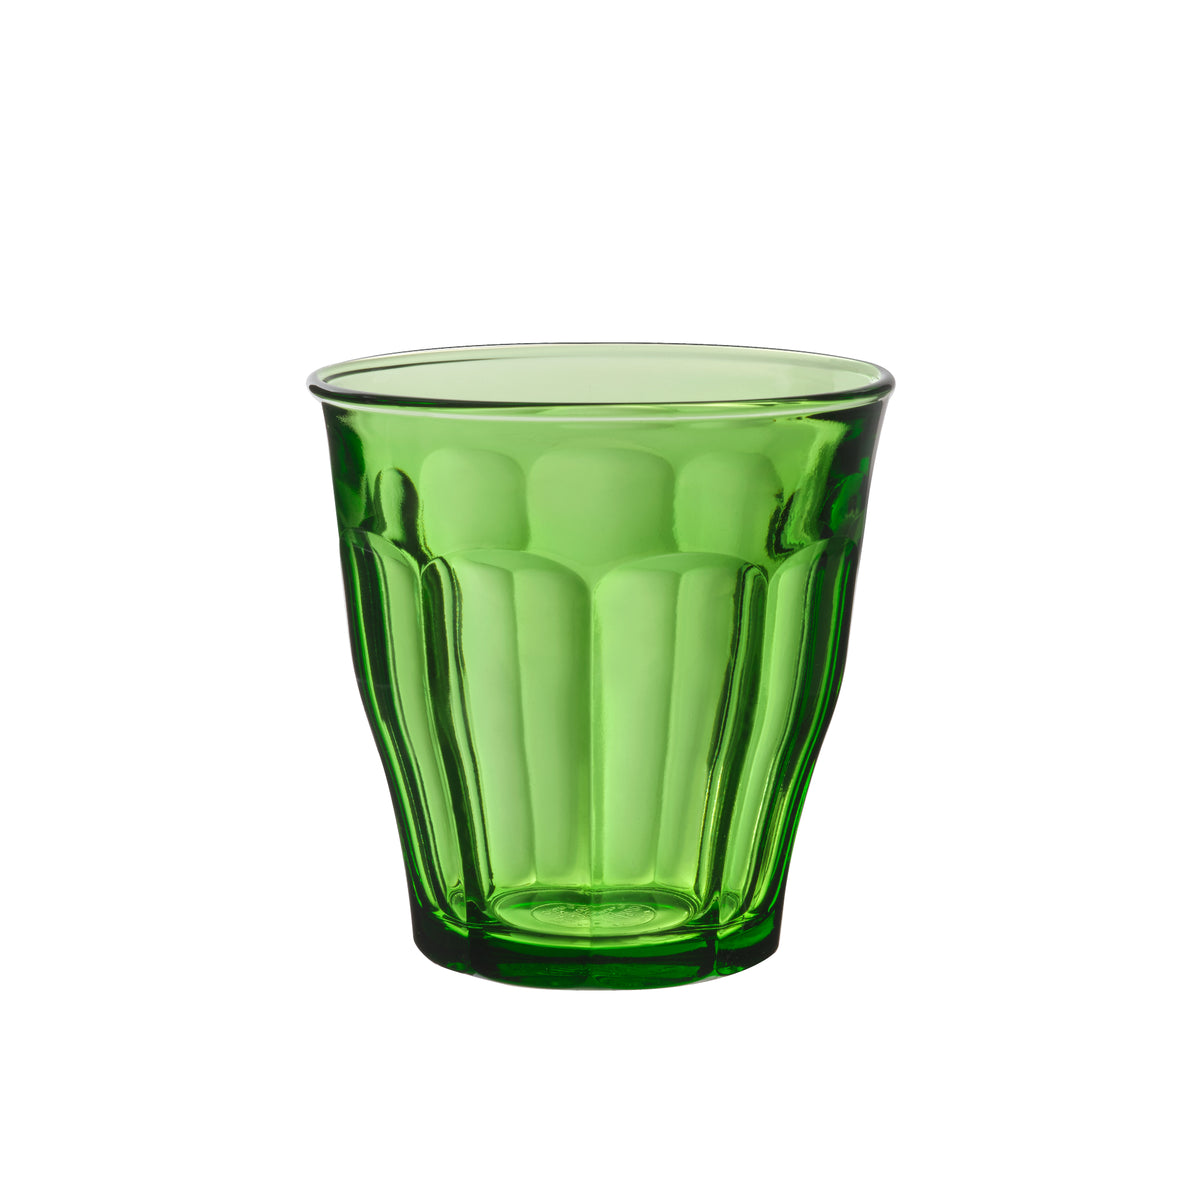 Le Picardie® Green Tumbler, Duralex USA